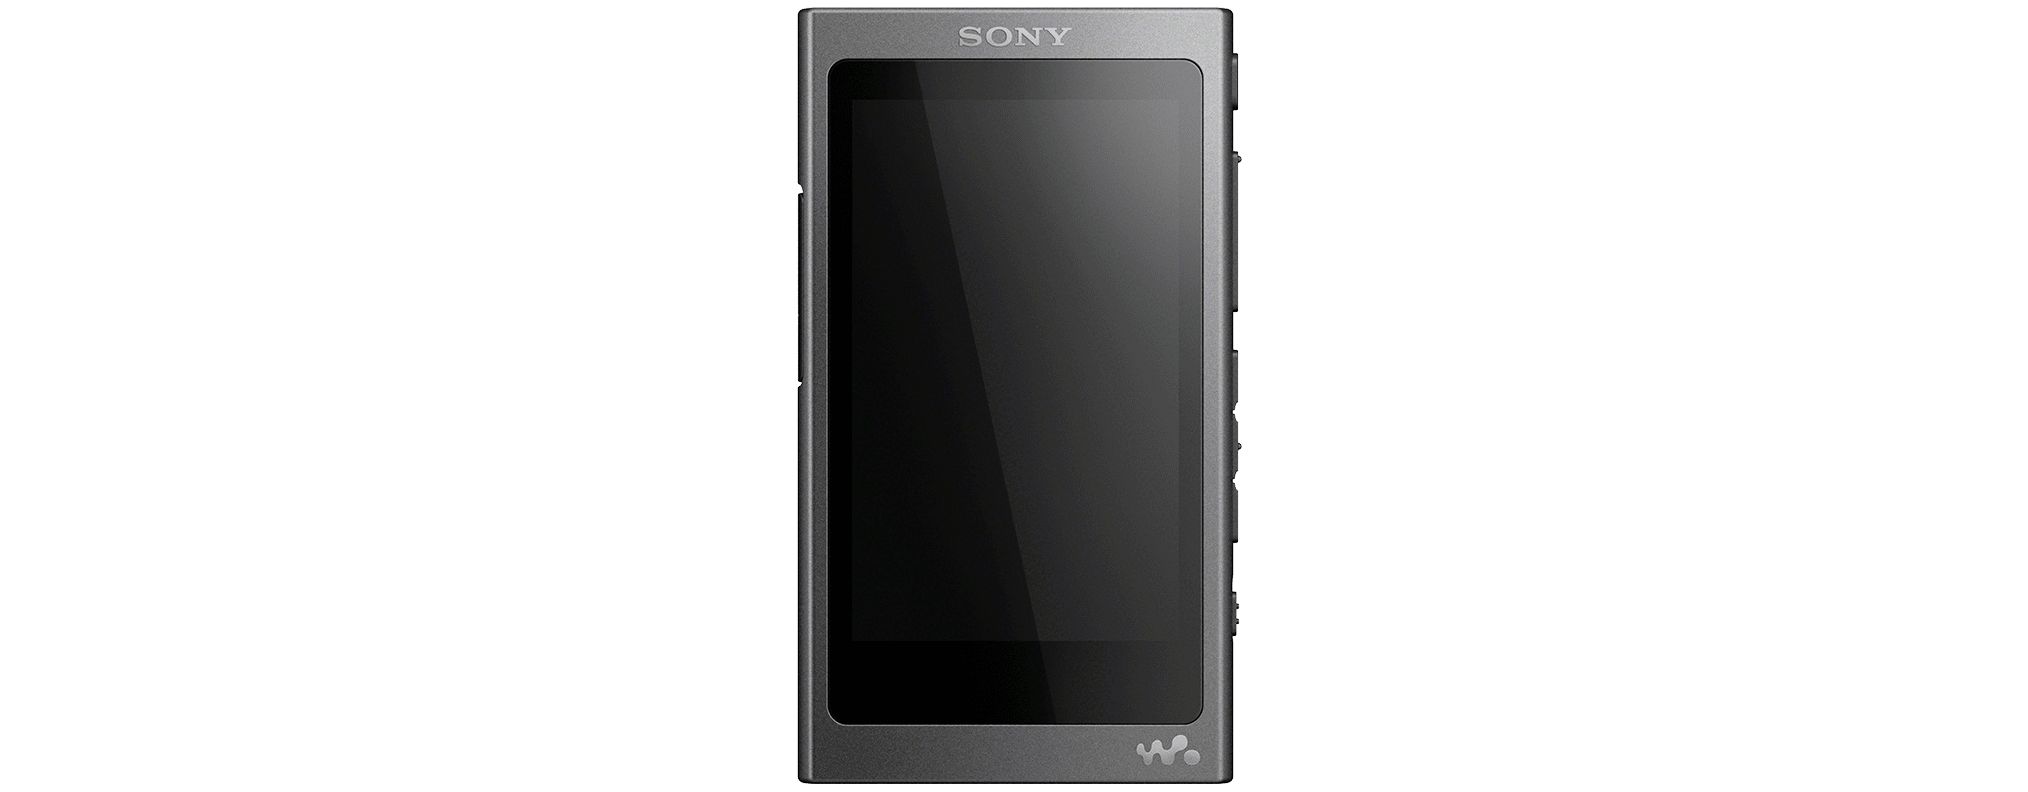 SONY NW-A35/B Black Walkman® with High-Resolution Audio